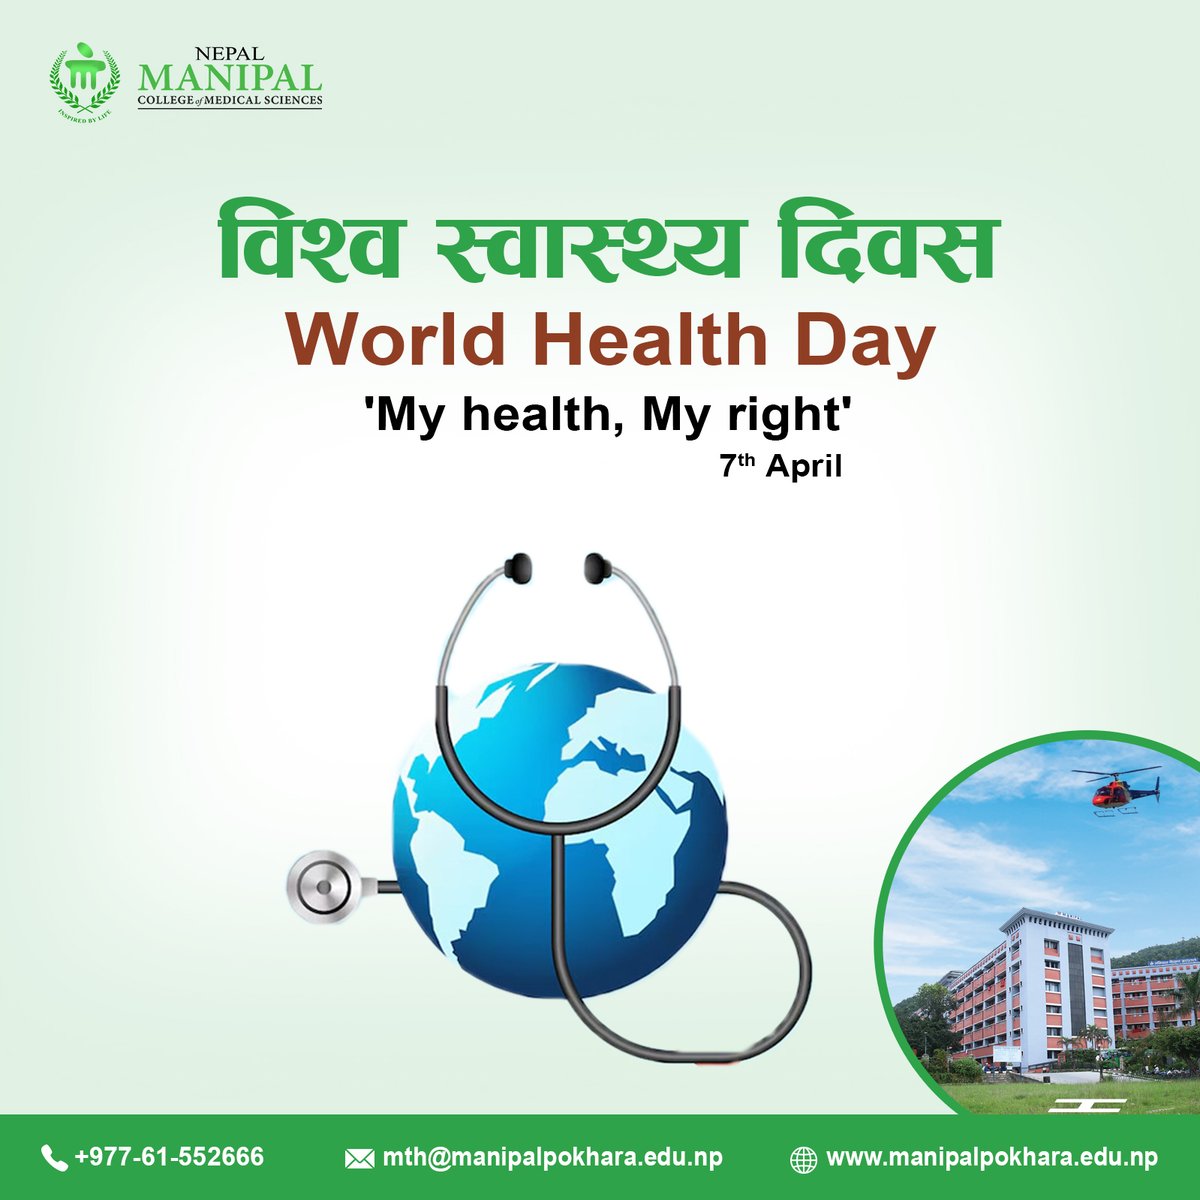 विश्व स्वास्थ्य दिवस
World Health Day

'मेराे स्वास्थ्य, मेराे अधिकार'
'My health, My right'

#WorldHealthDay #MyhealthMyright #ManipalTeachingHospital #PokharaManipalTeachingHospital
#ManipalPokhara #Manipal #PokharaManipal #BATASorganization
#BATASnepal #BATASmanipal